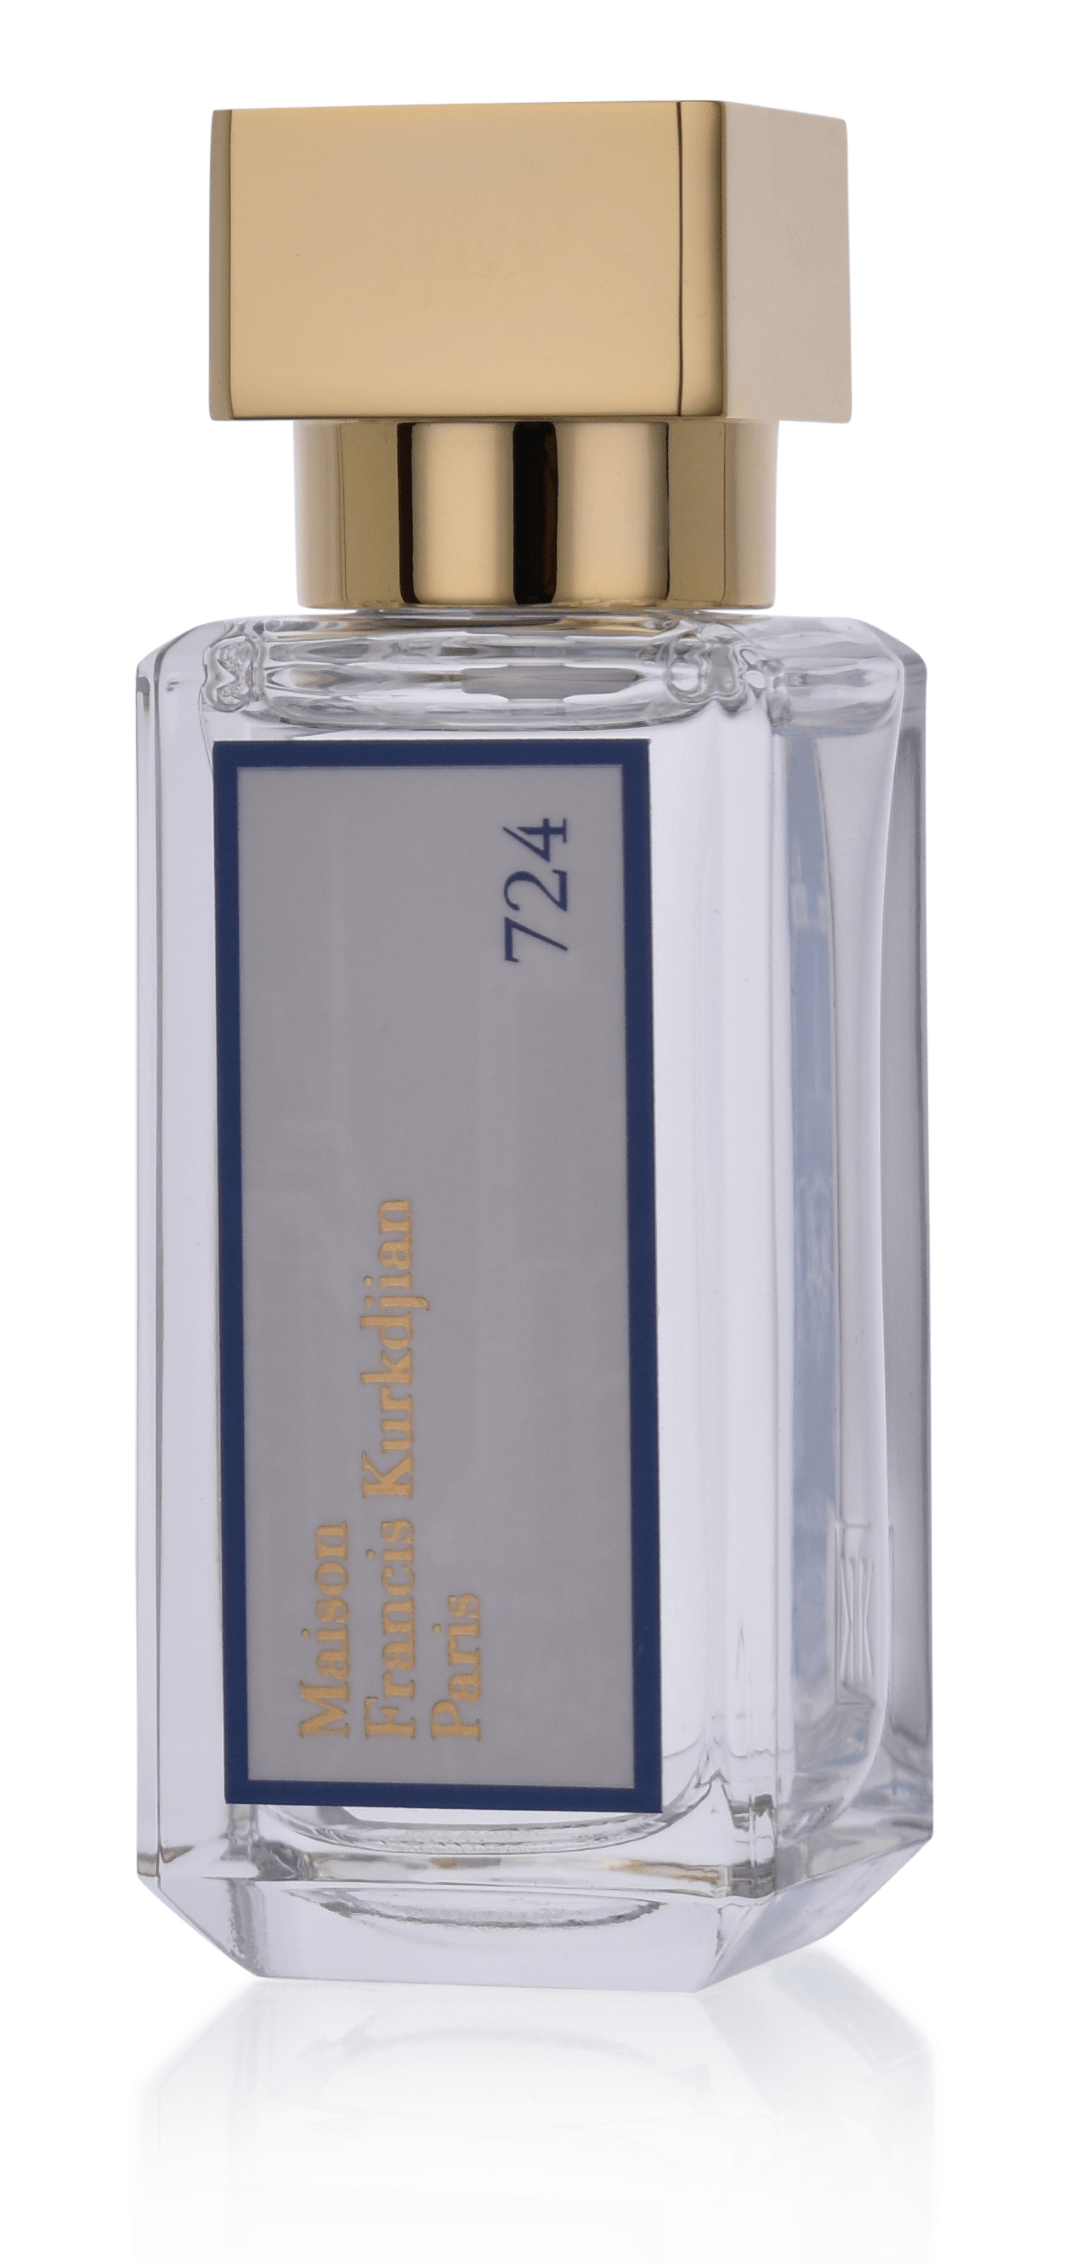 Maison Francis Kurkdjian 724 Eau de Parfum 35 ml  